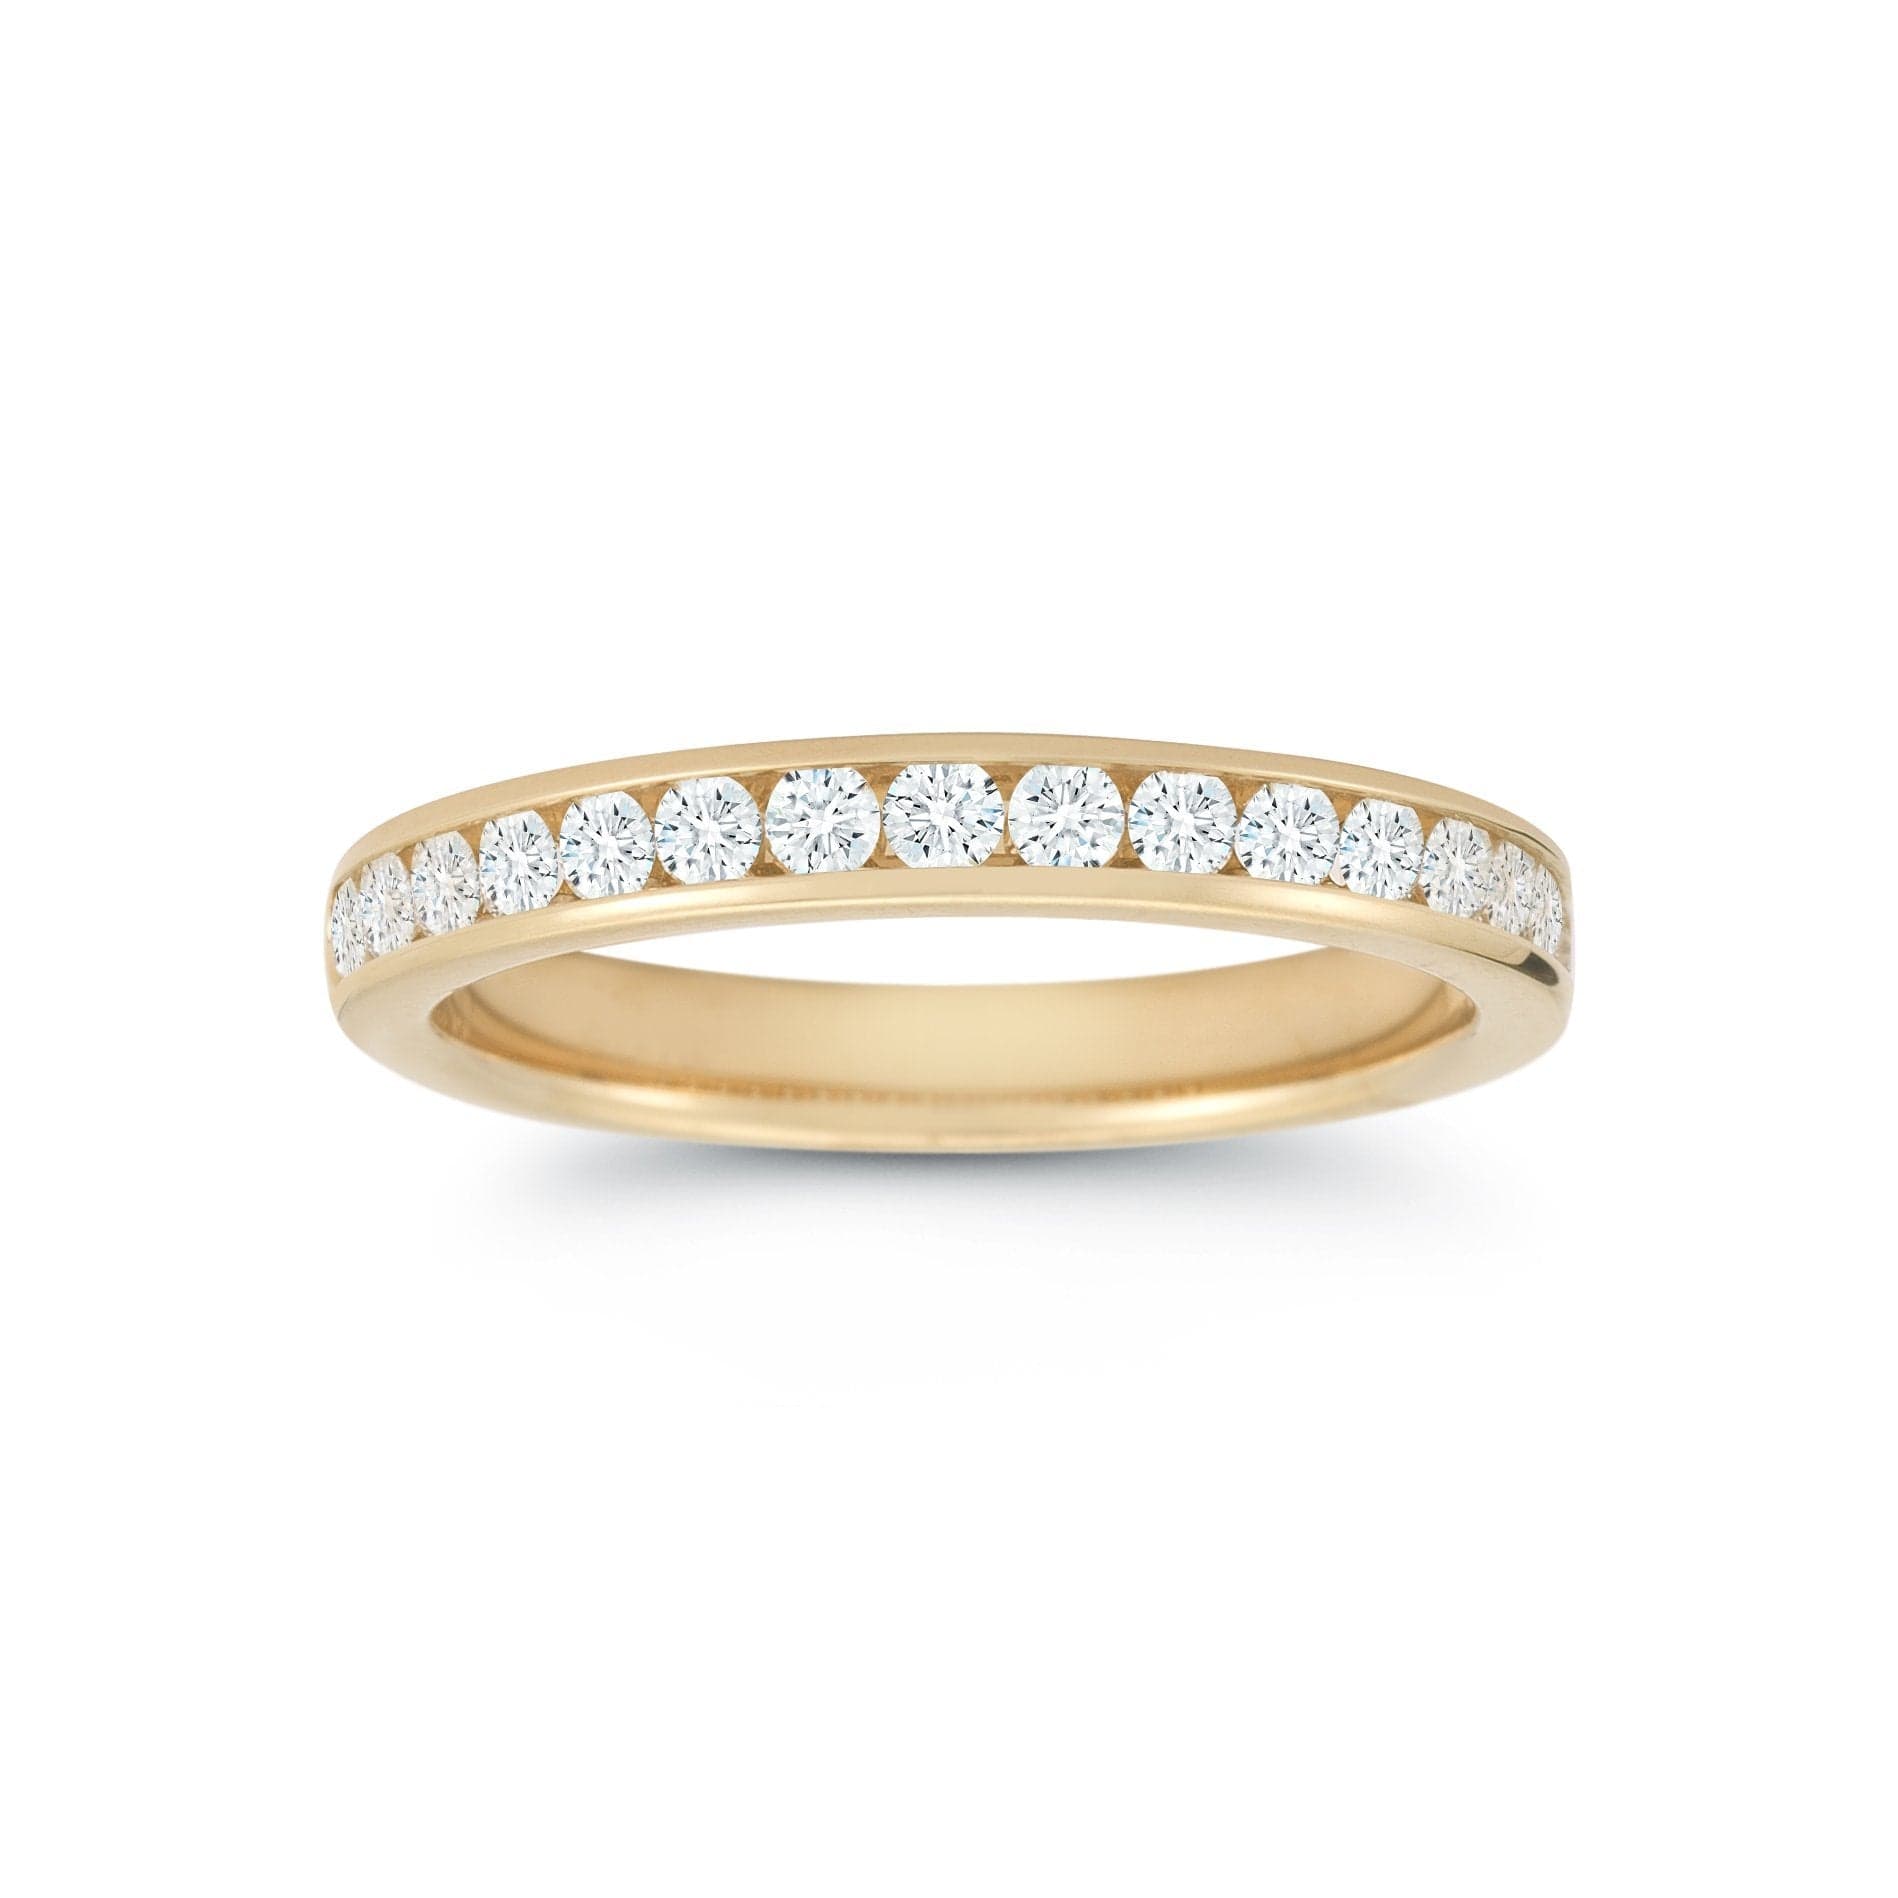 18K Yellow Gold Channel Set Diamond Wedding Ring